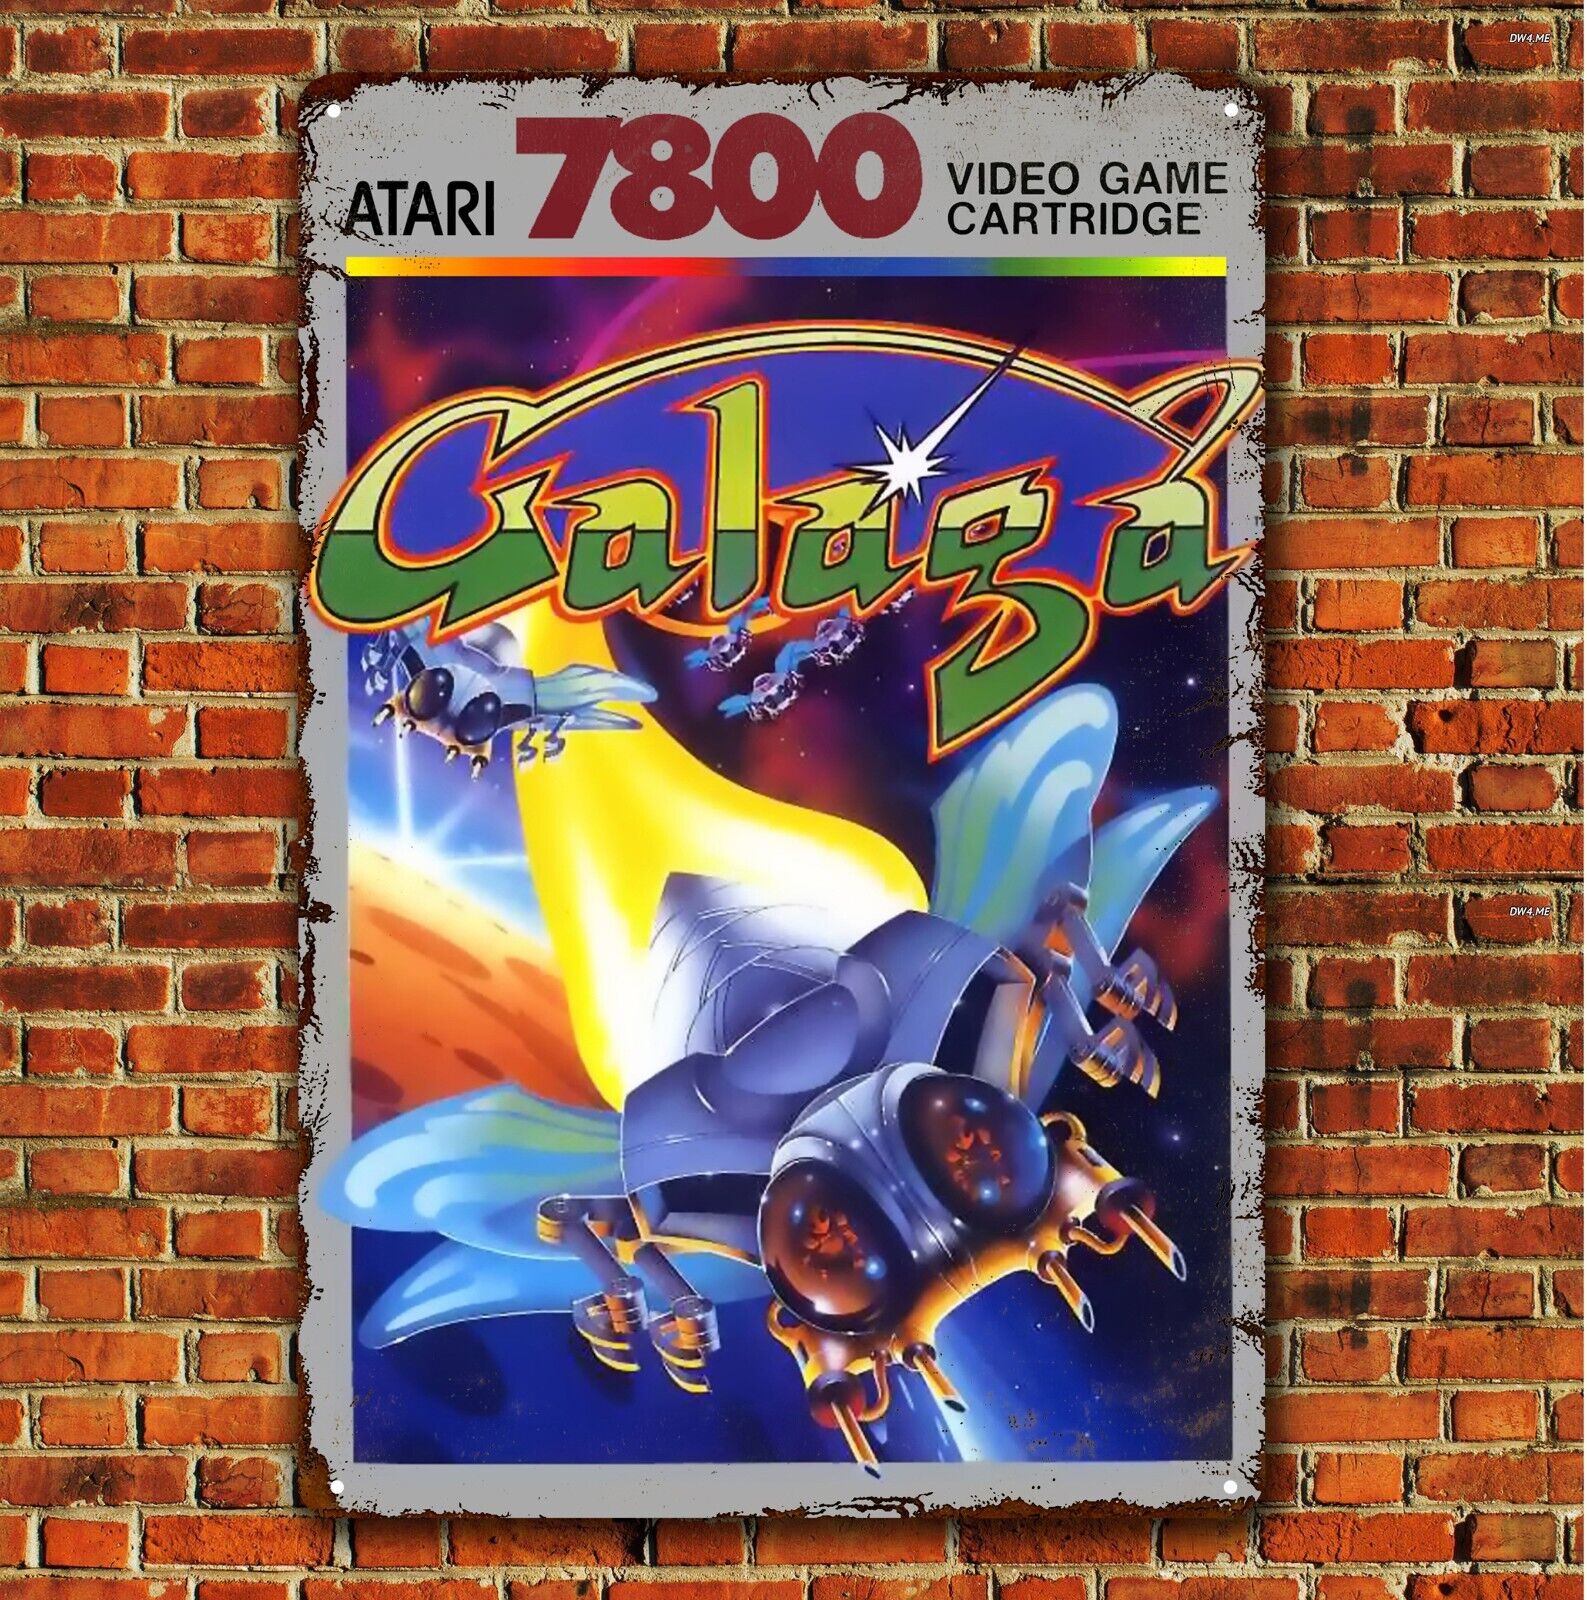 Galaga Video Game Metal Poster - Atari 7800 Collectable Tin Sign (8x12in)